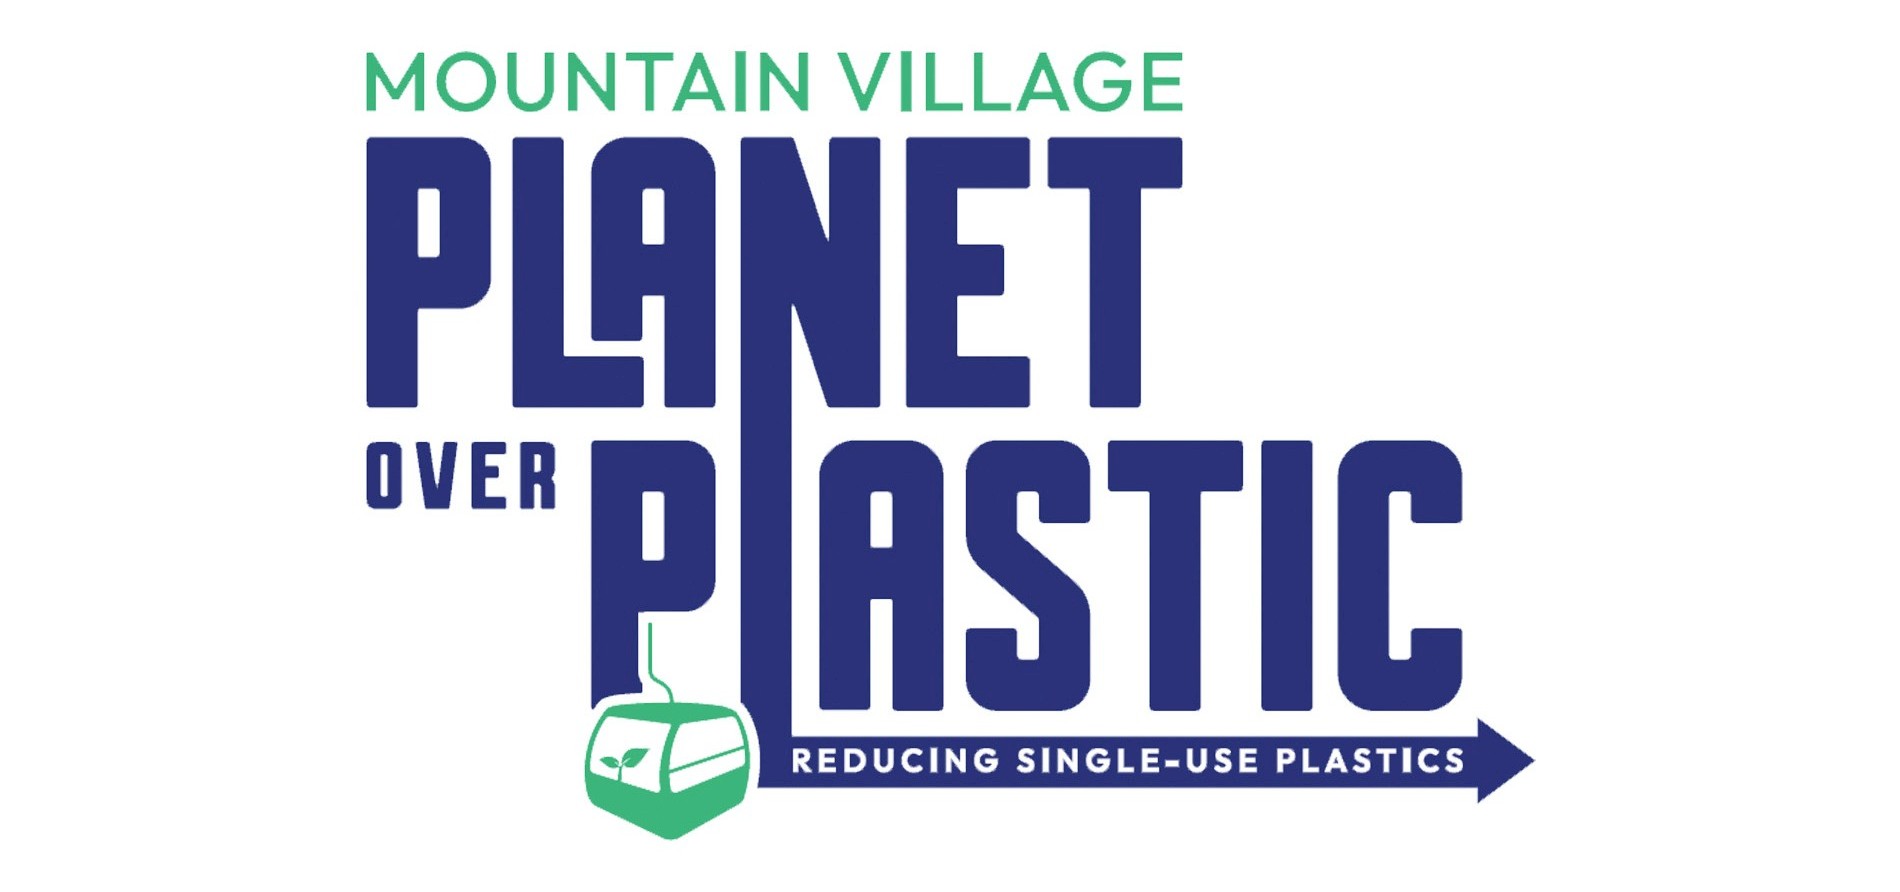 Planet Over Plastics